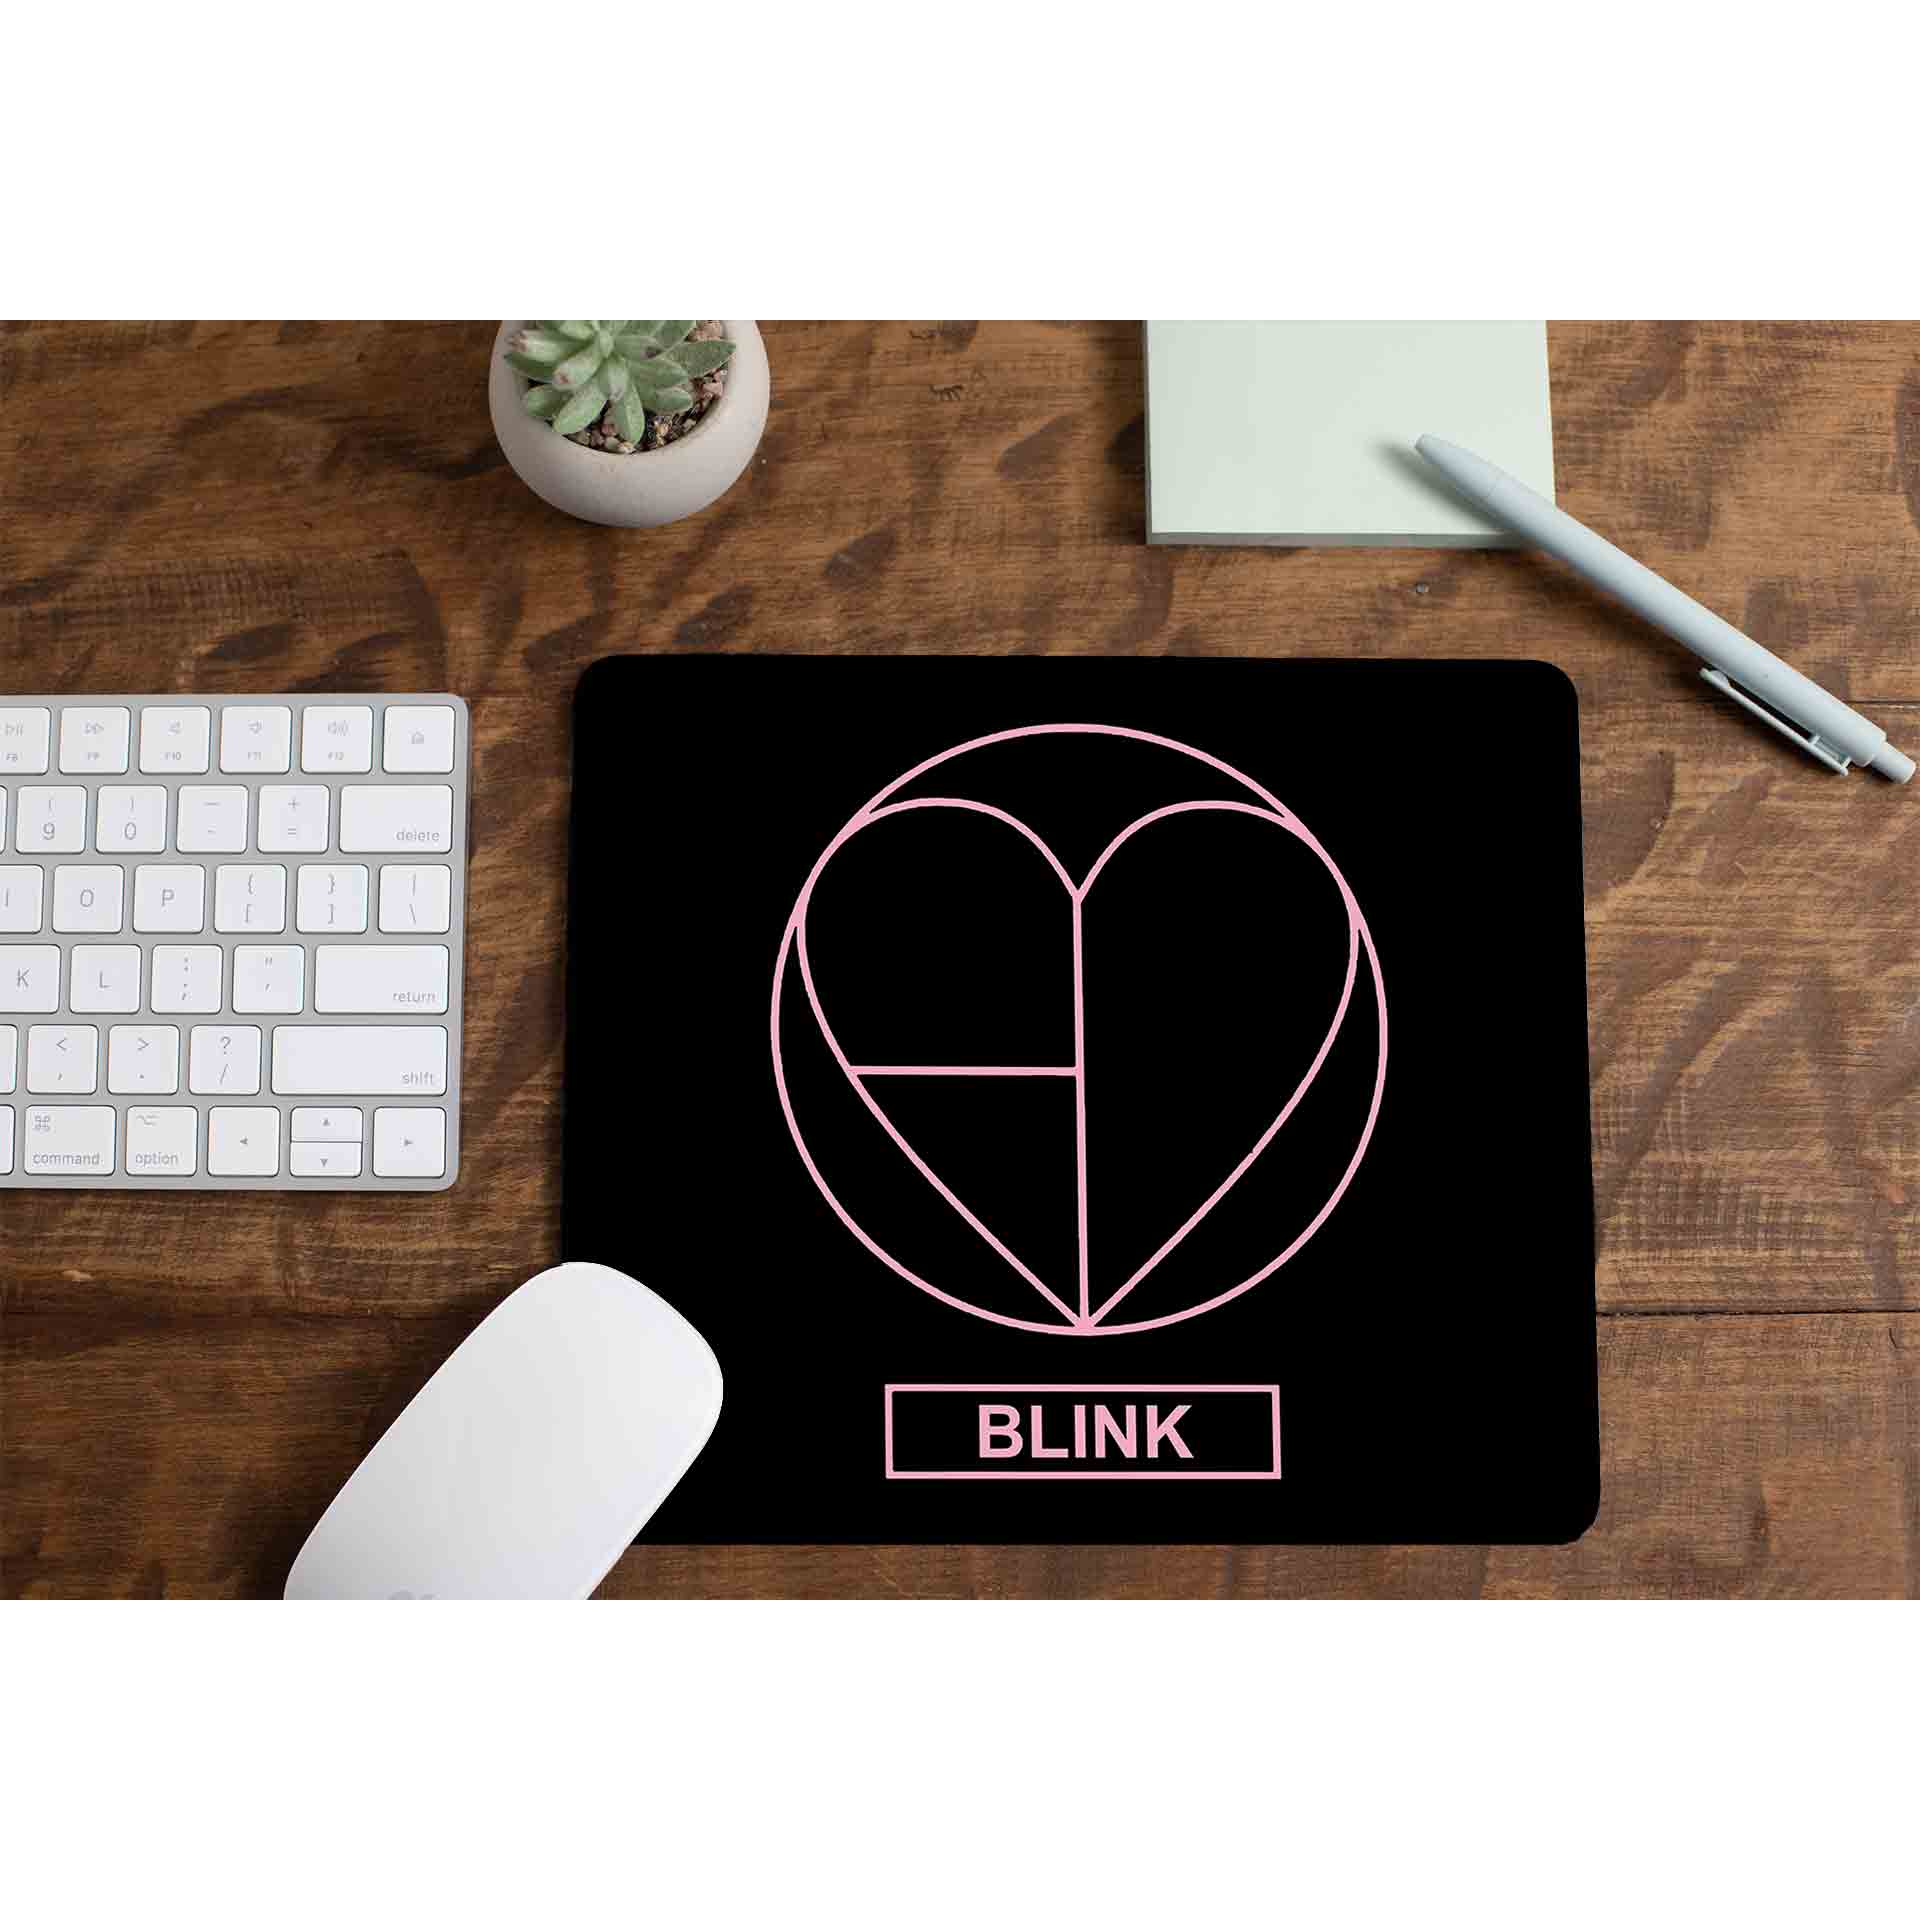 Blackpink Tank Tops - BLINK new logo design arts Tank Top RB0408 - ® Blackpink Store